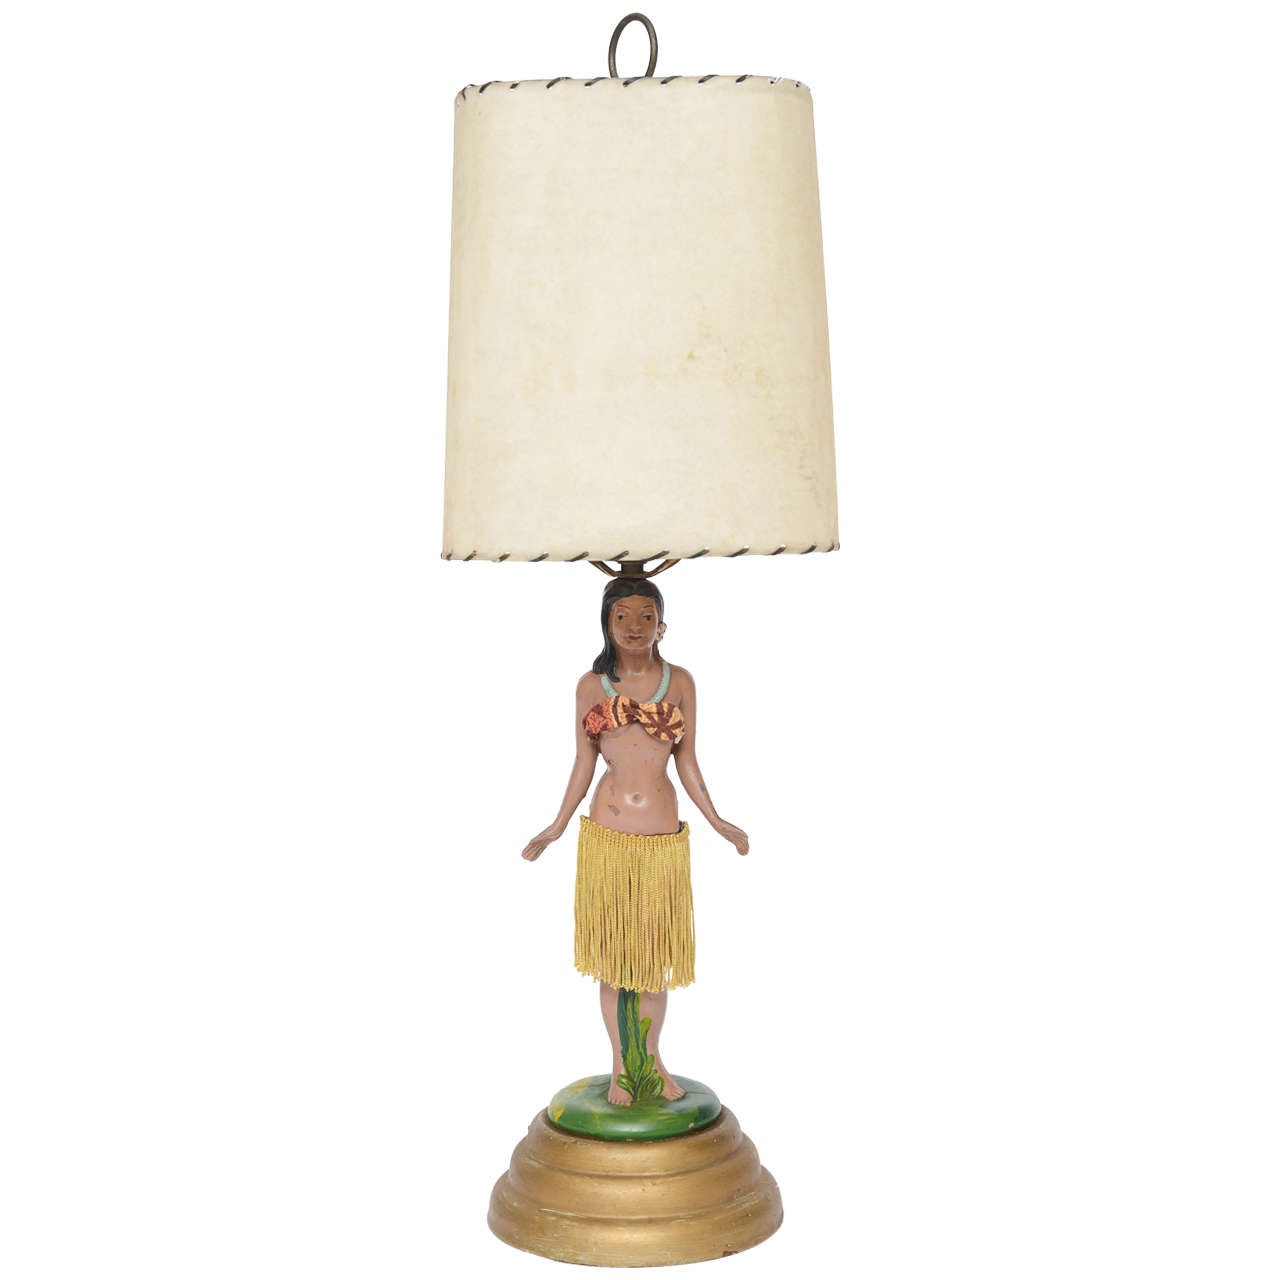 Original Vintage Hula Girl Lamp from 1940's